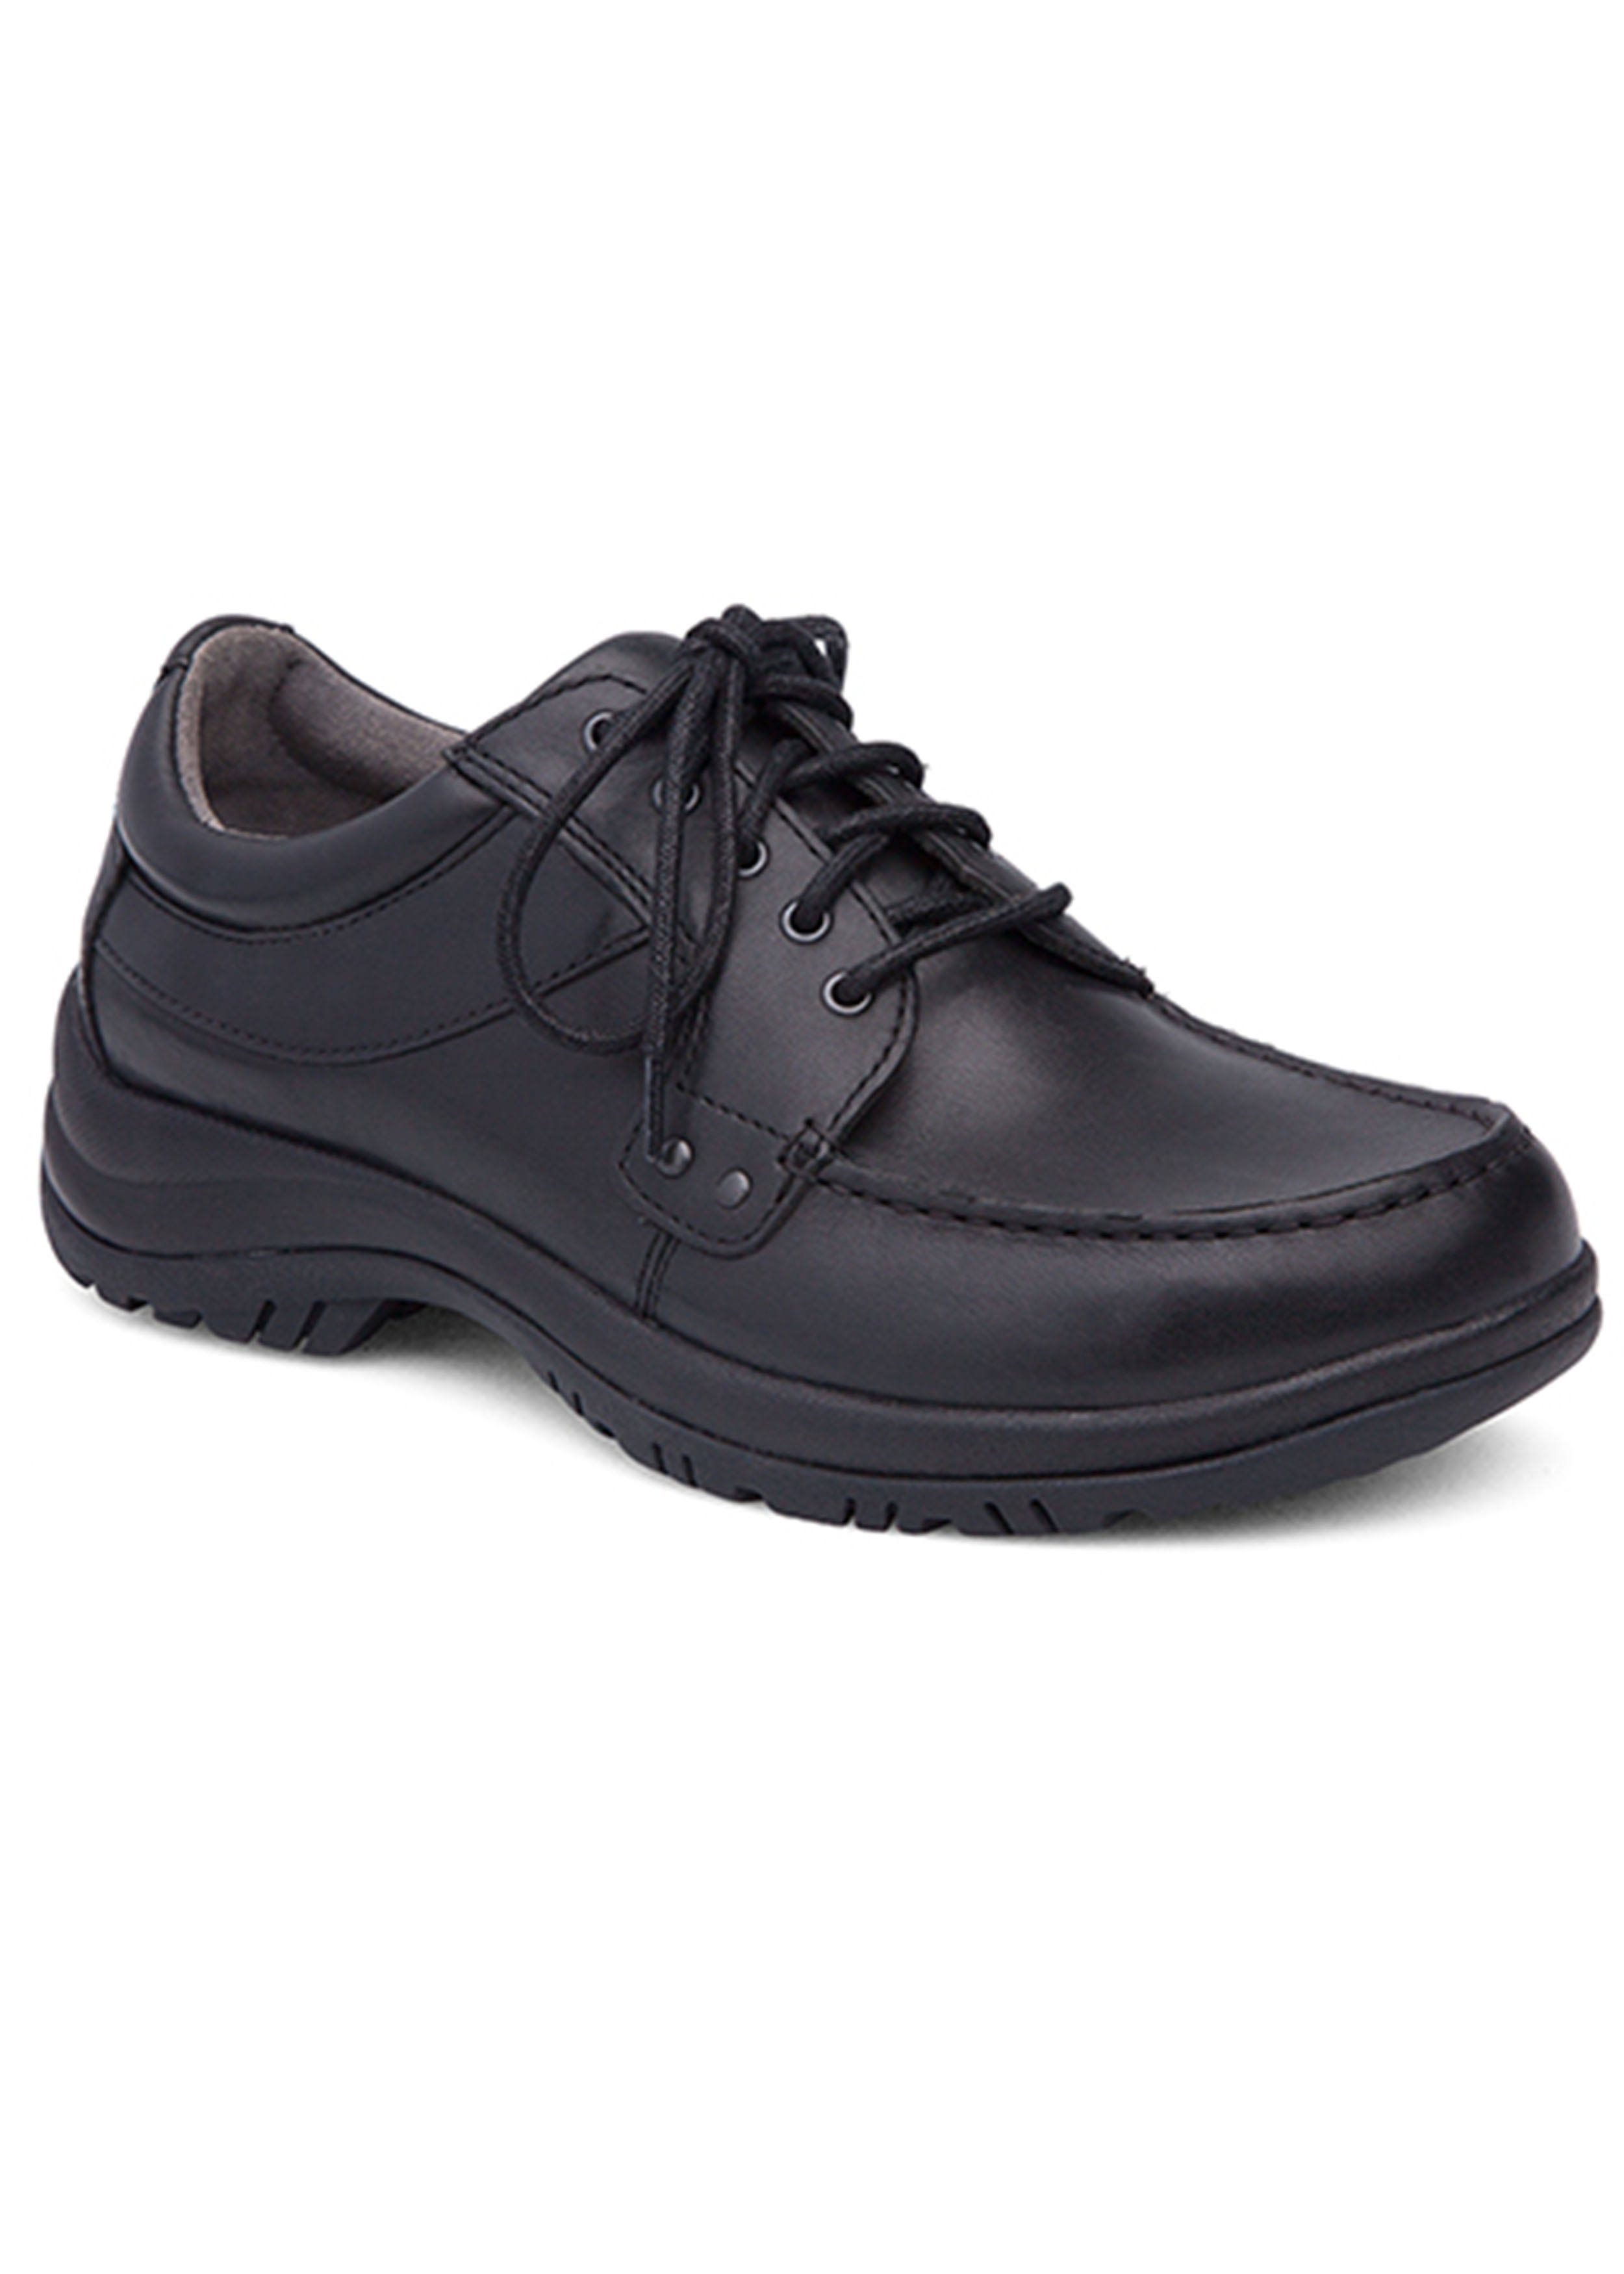 Dansko Men's Wyatt Full Grain Oxford Shoes - Black, 47 EU